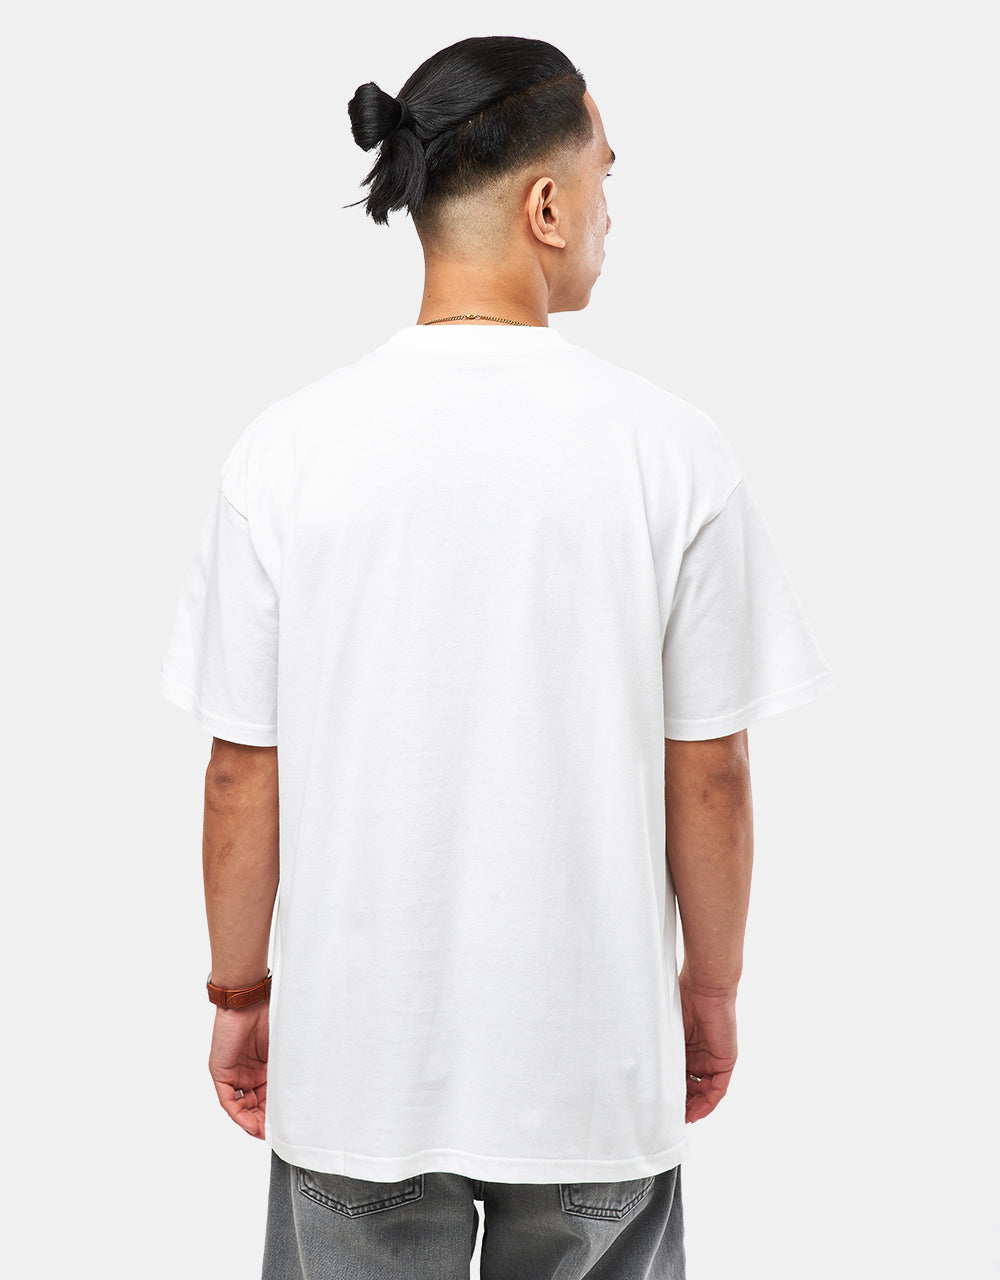 Carhartt WIP Field Pocket T-Shirt - White